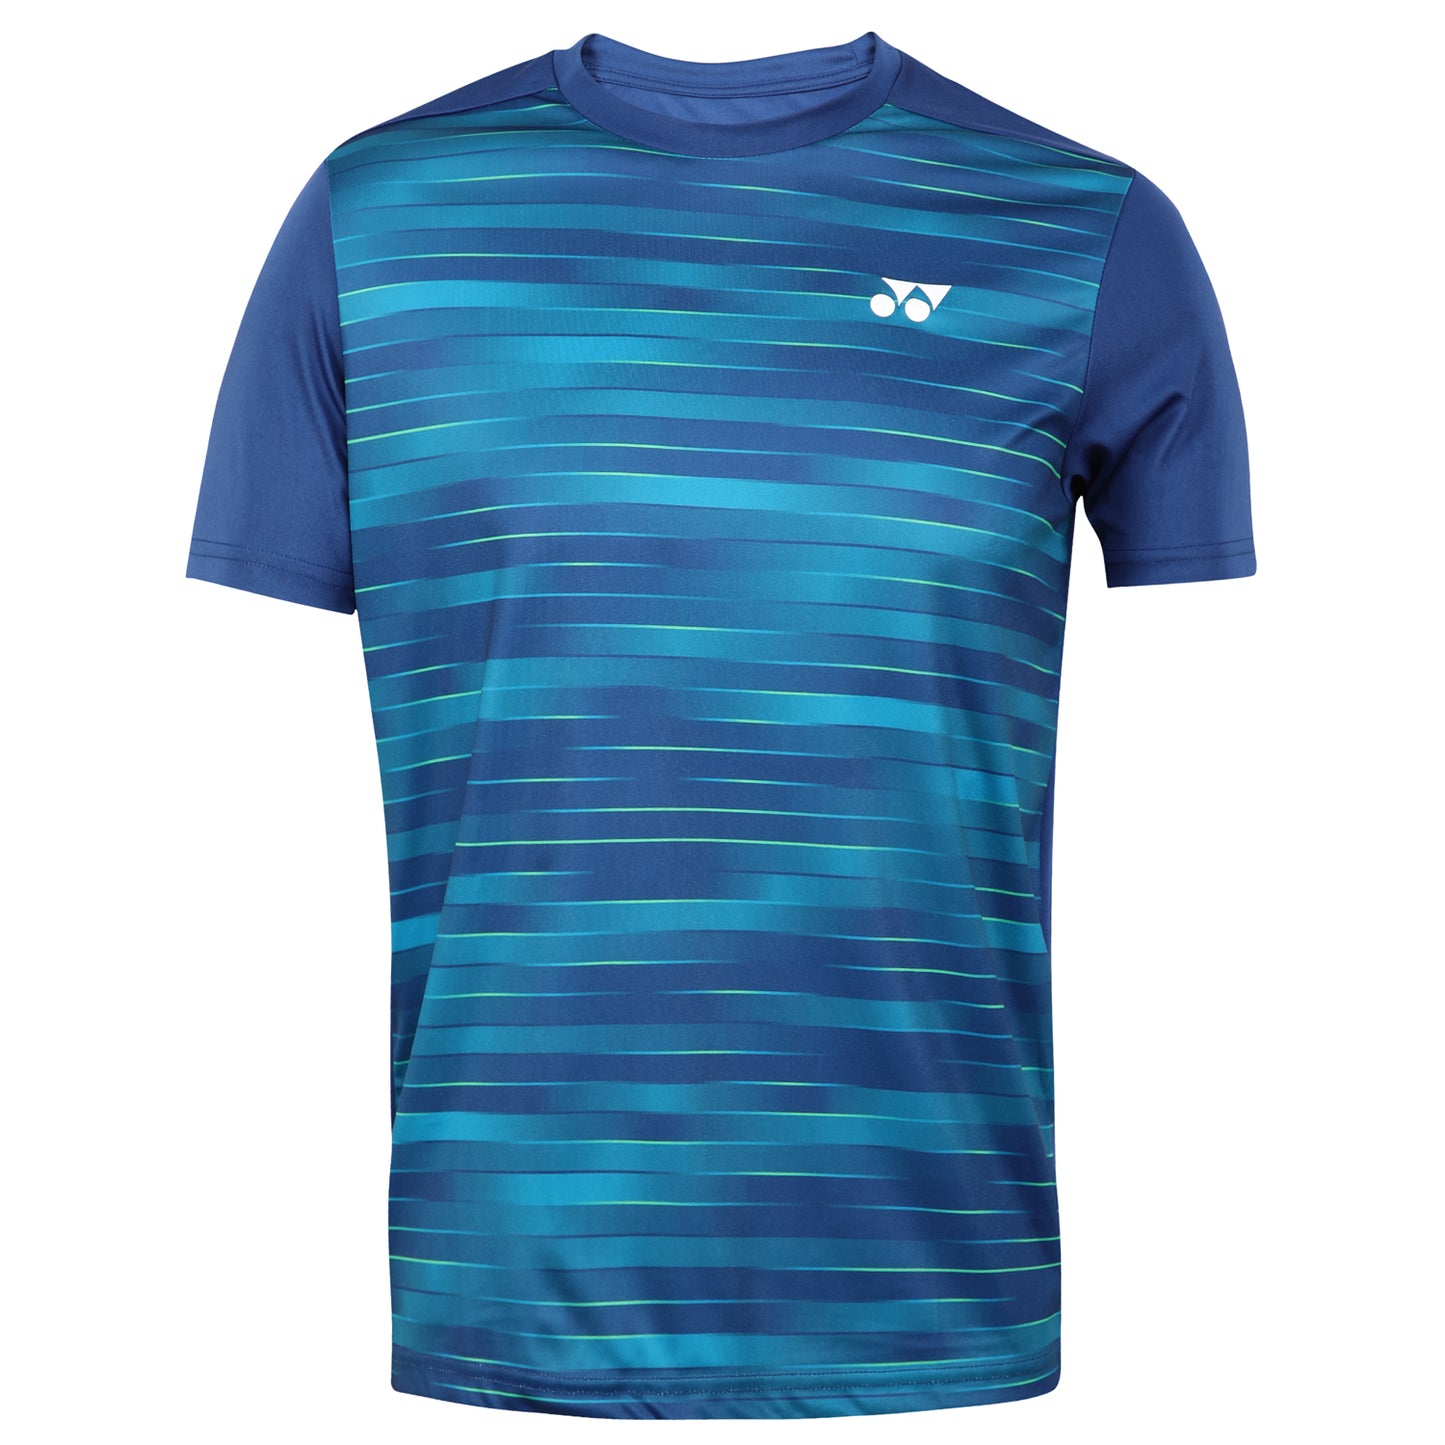 Yonex Round Neck Badminton T-Shirt, Poseidon - Best Price online Prokicksports.com